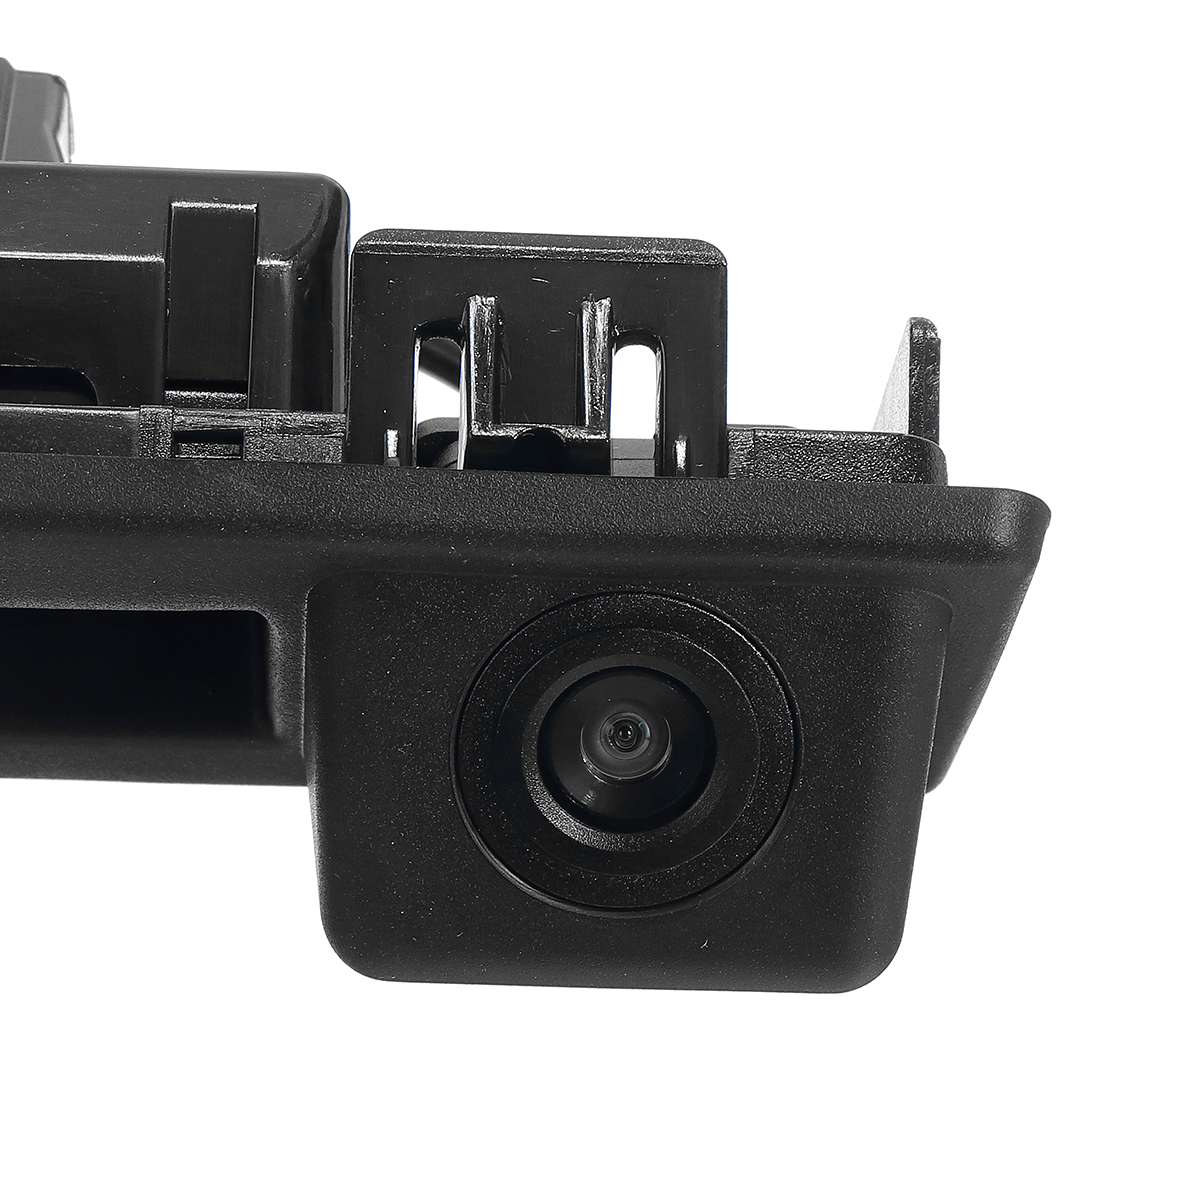 Car Rear View Camera 170 Degree Wide Angle Waterproof IP67 for Skoda Octavia MK3 A7 5E 2016-2019 - Auto GoShop